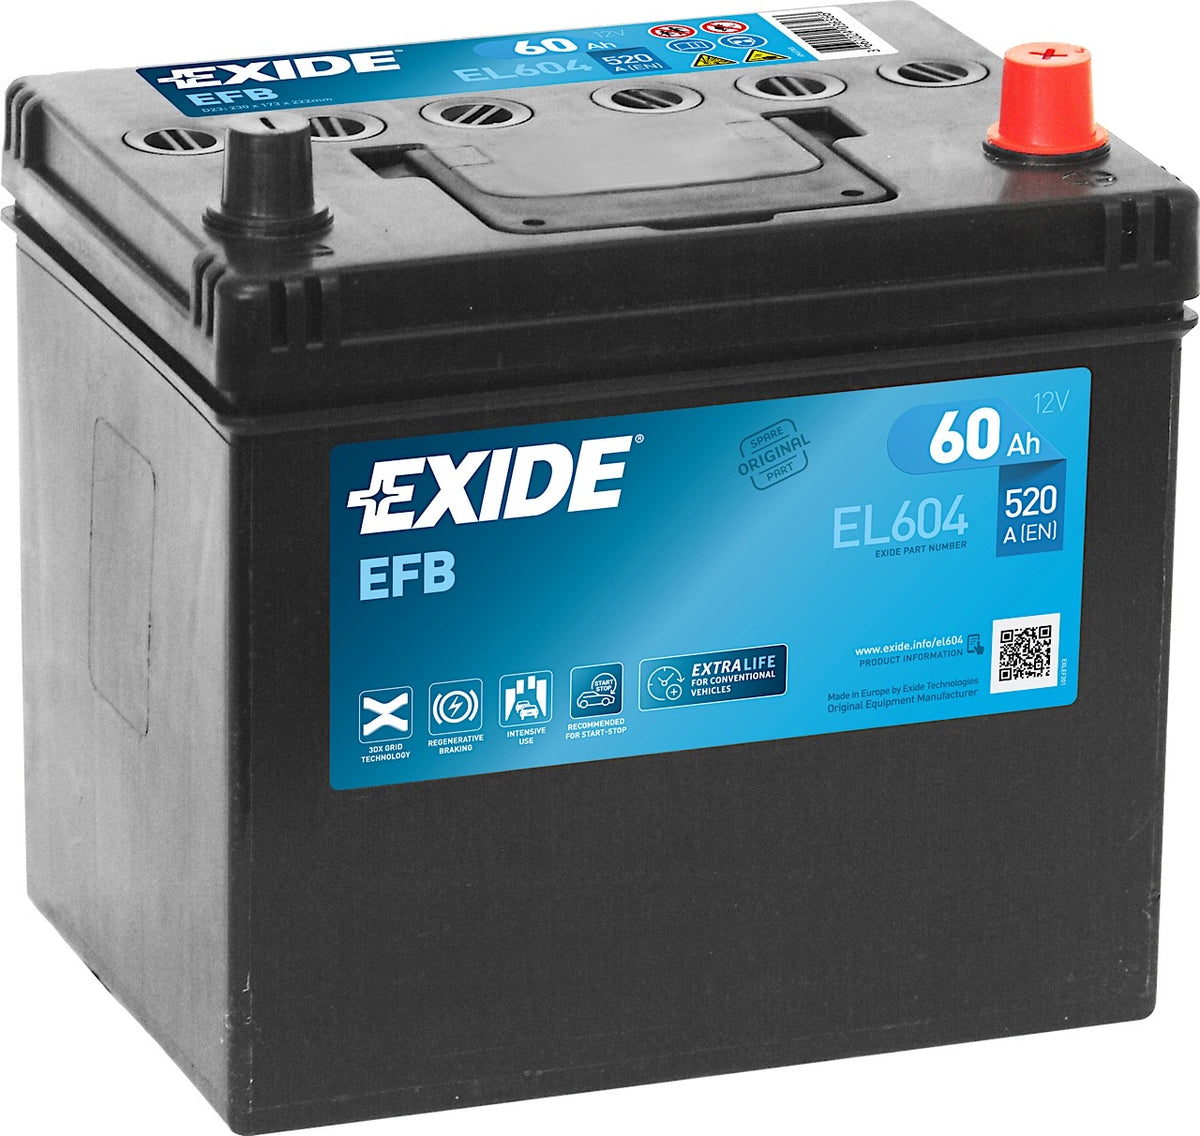 Exide Start-Stop EL604 EFB 12V 60Ah 520A/EN